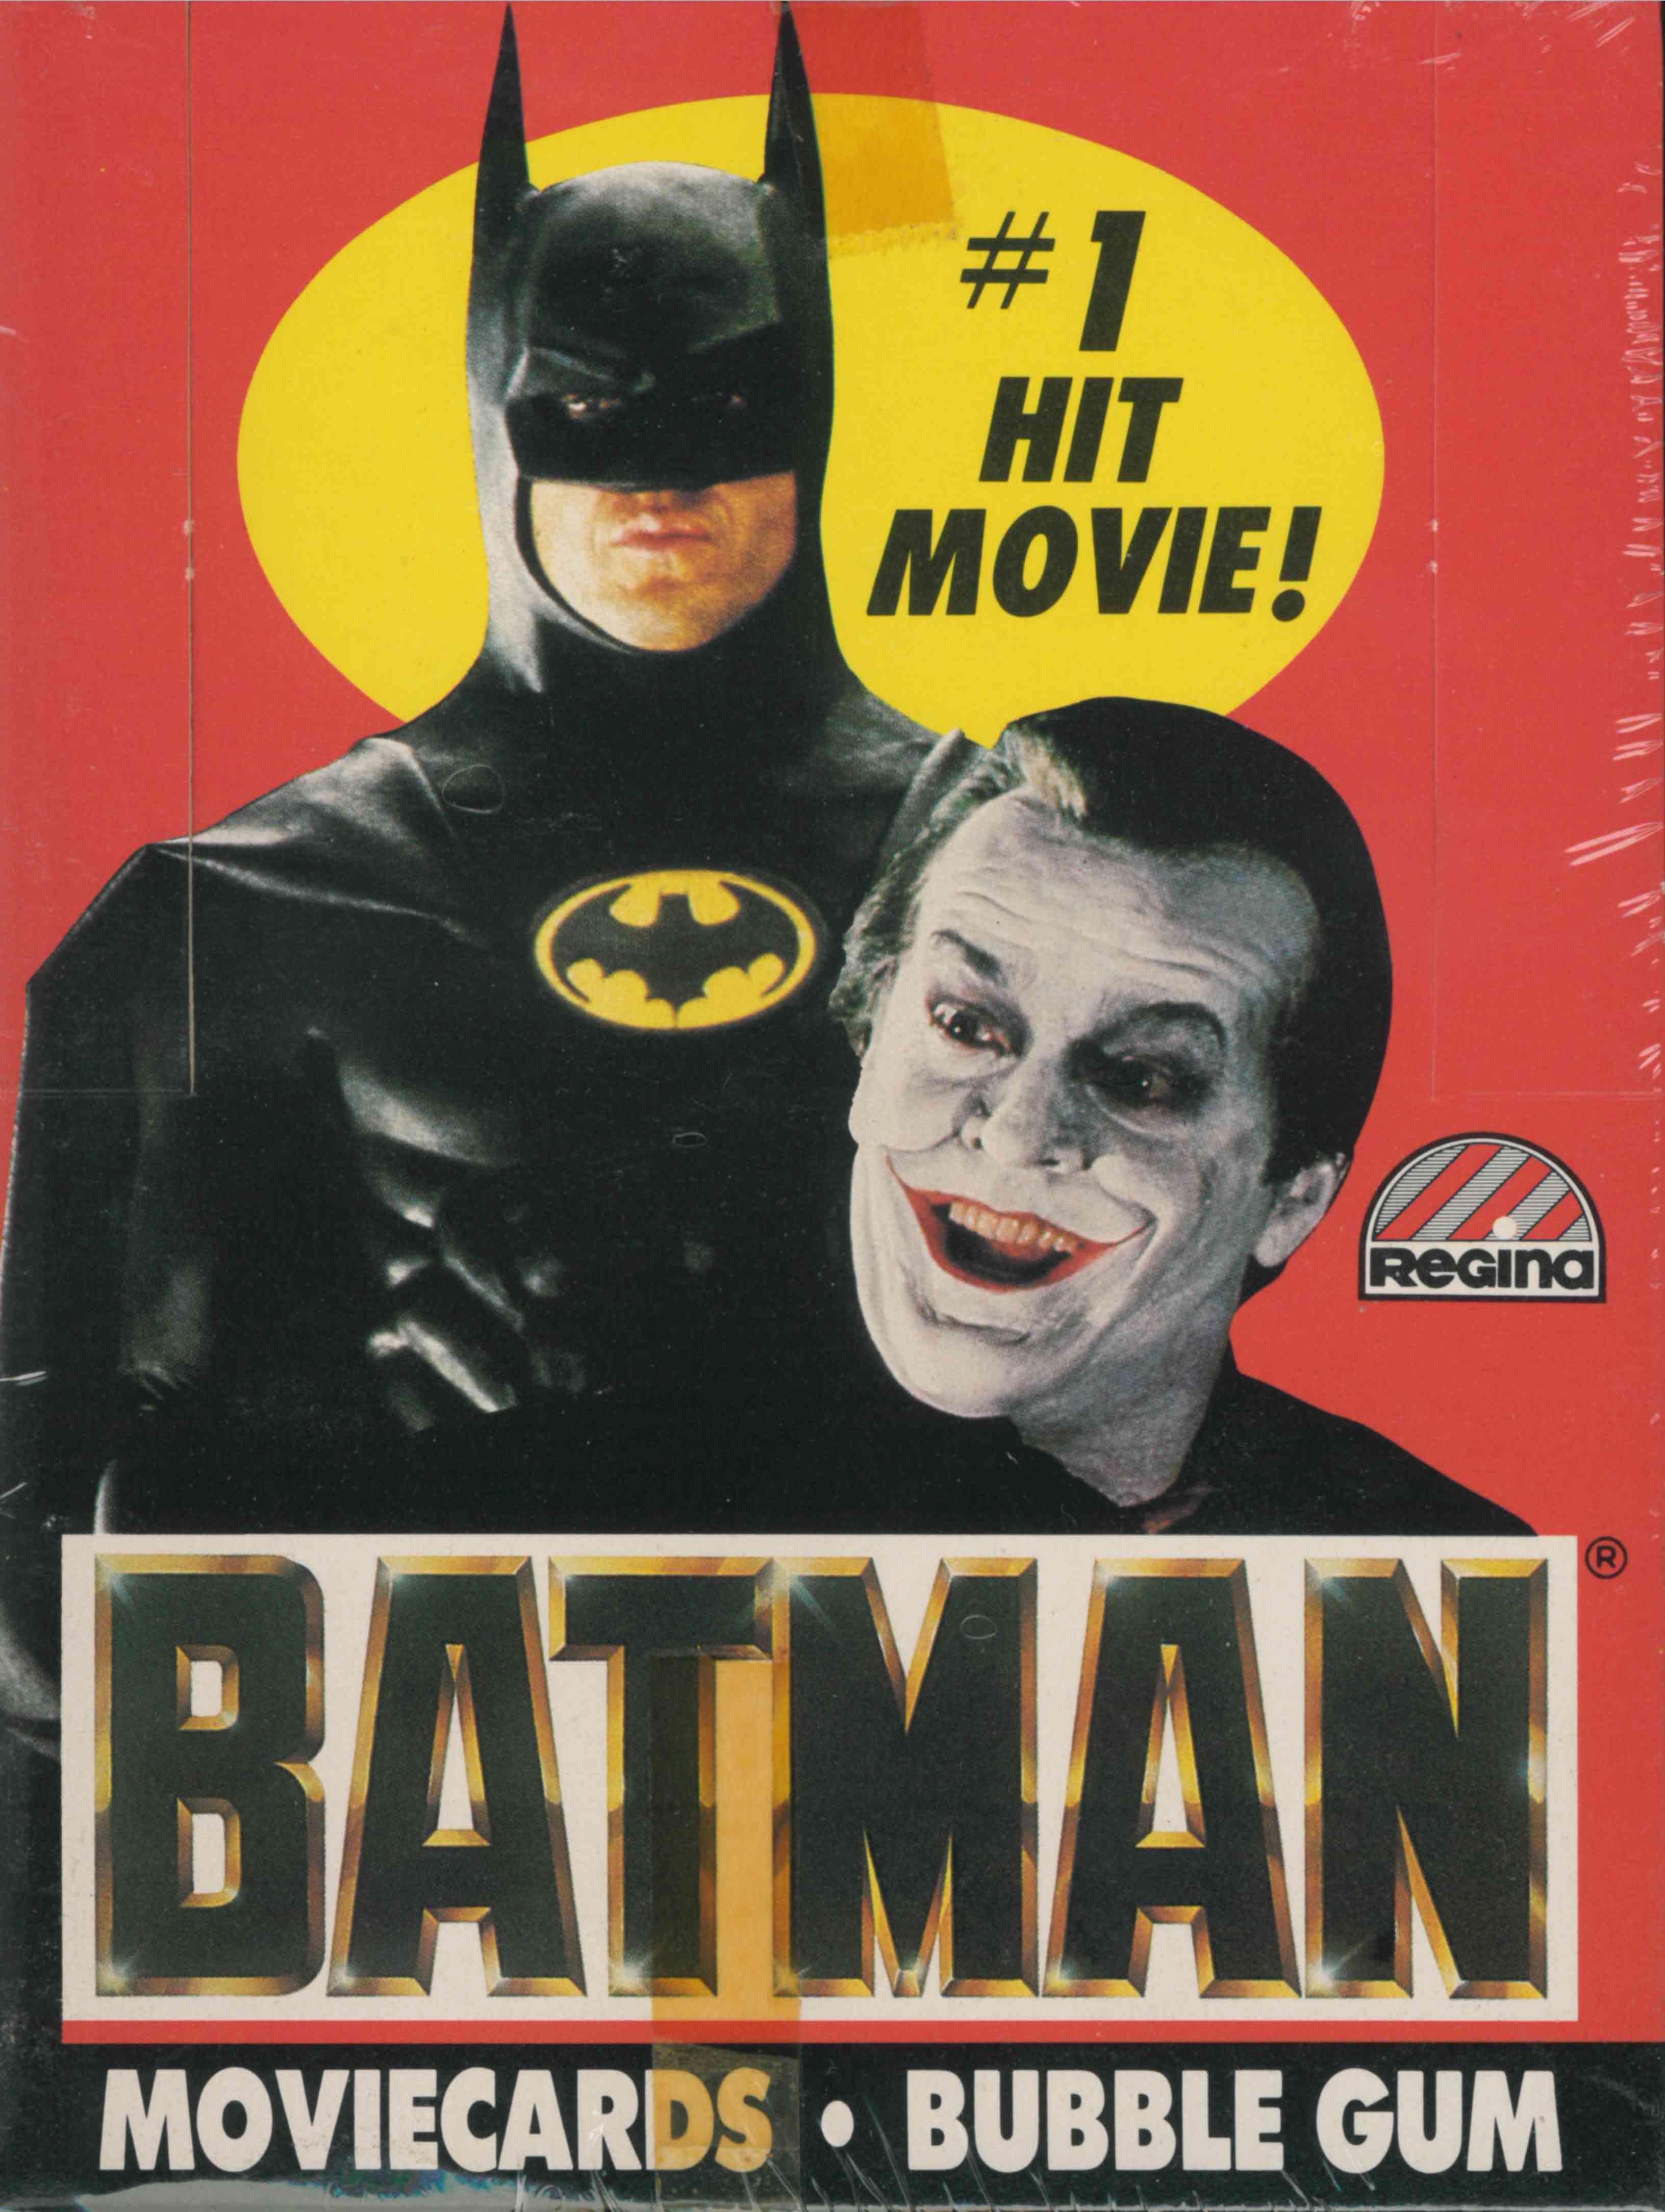 1989 REGINA BATMAN MOVIE SERIES 1 CARDS COMPLETE BOX (36 PACKS) - Kings Comics